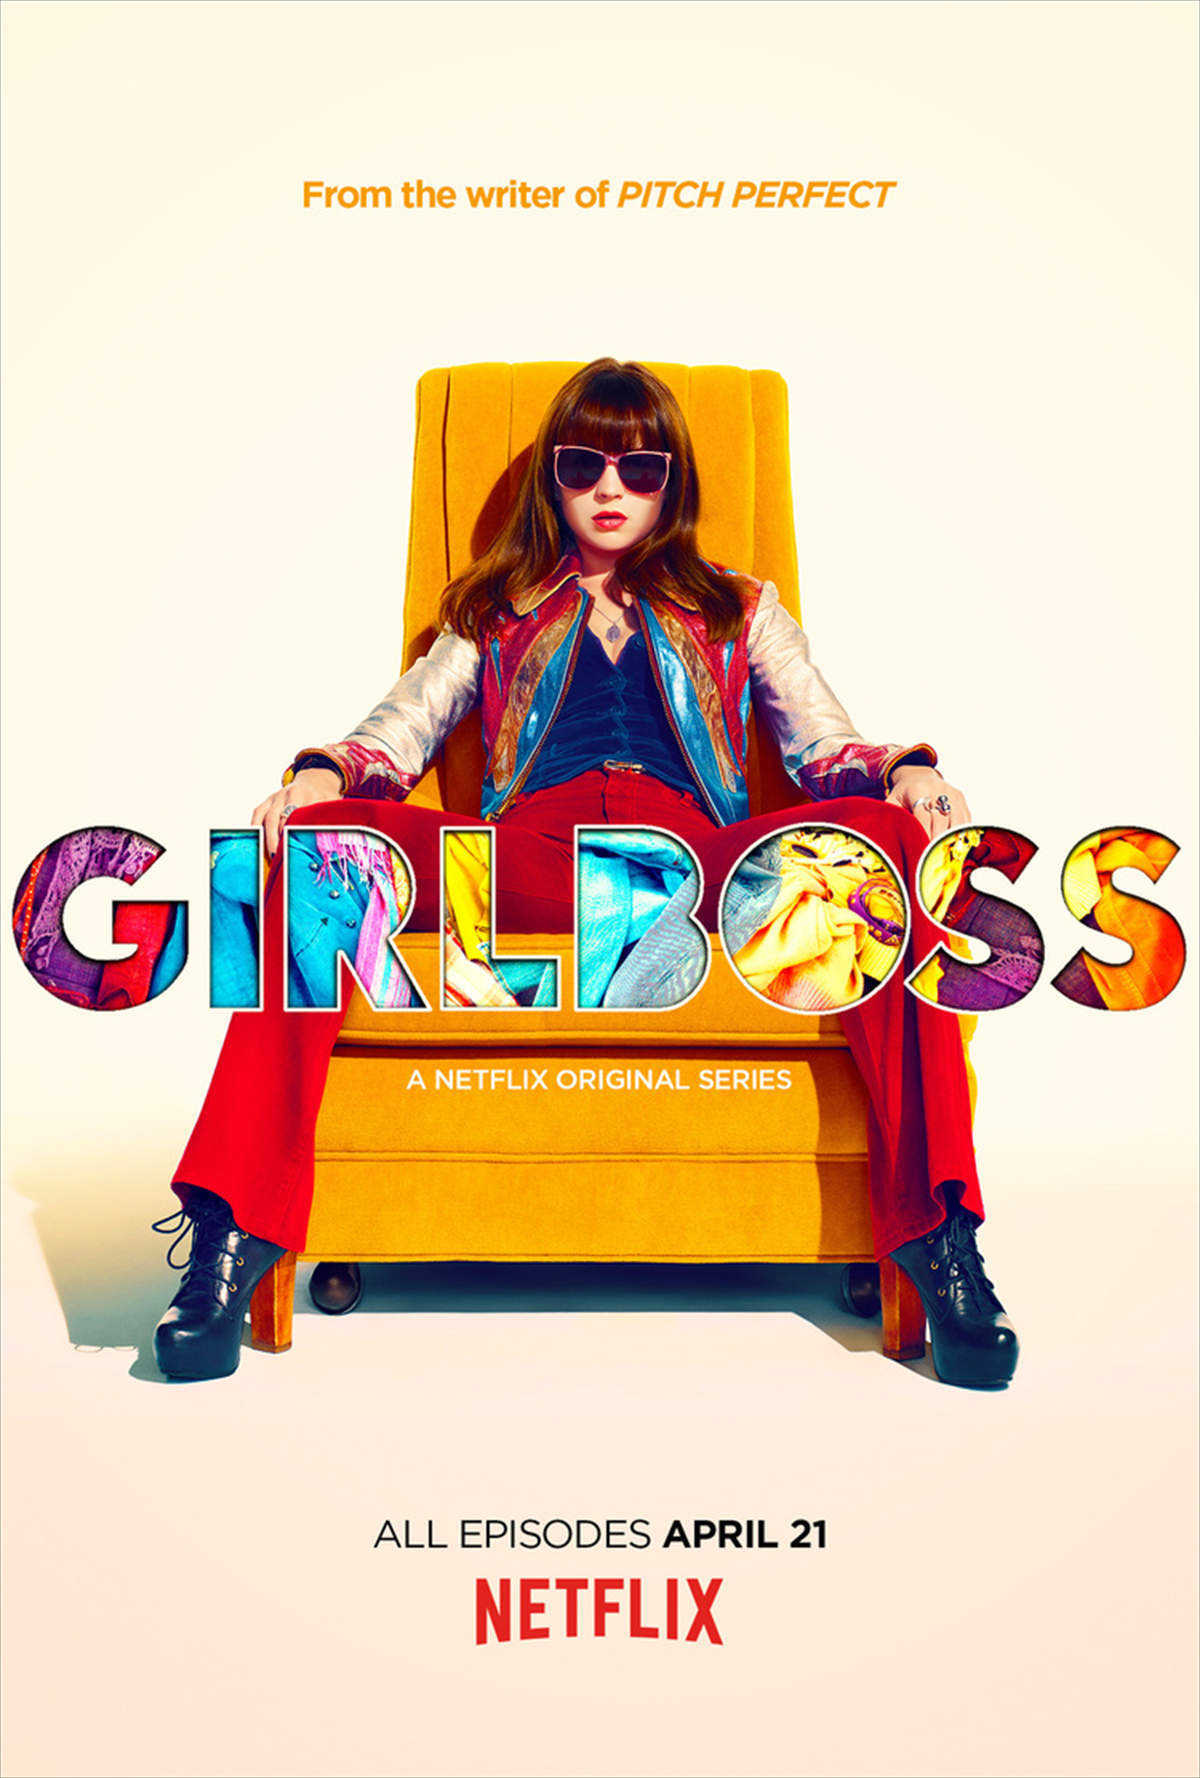 Netflixシリーズ「Girlboss ガールボス」